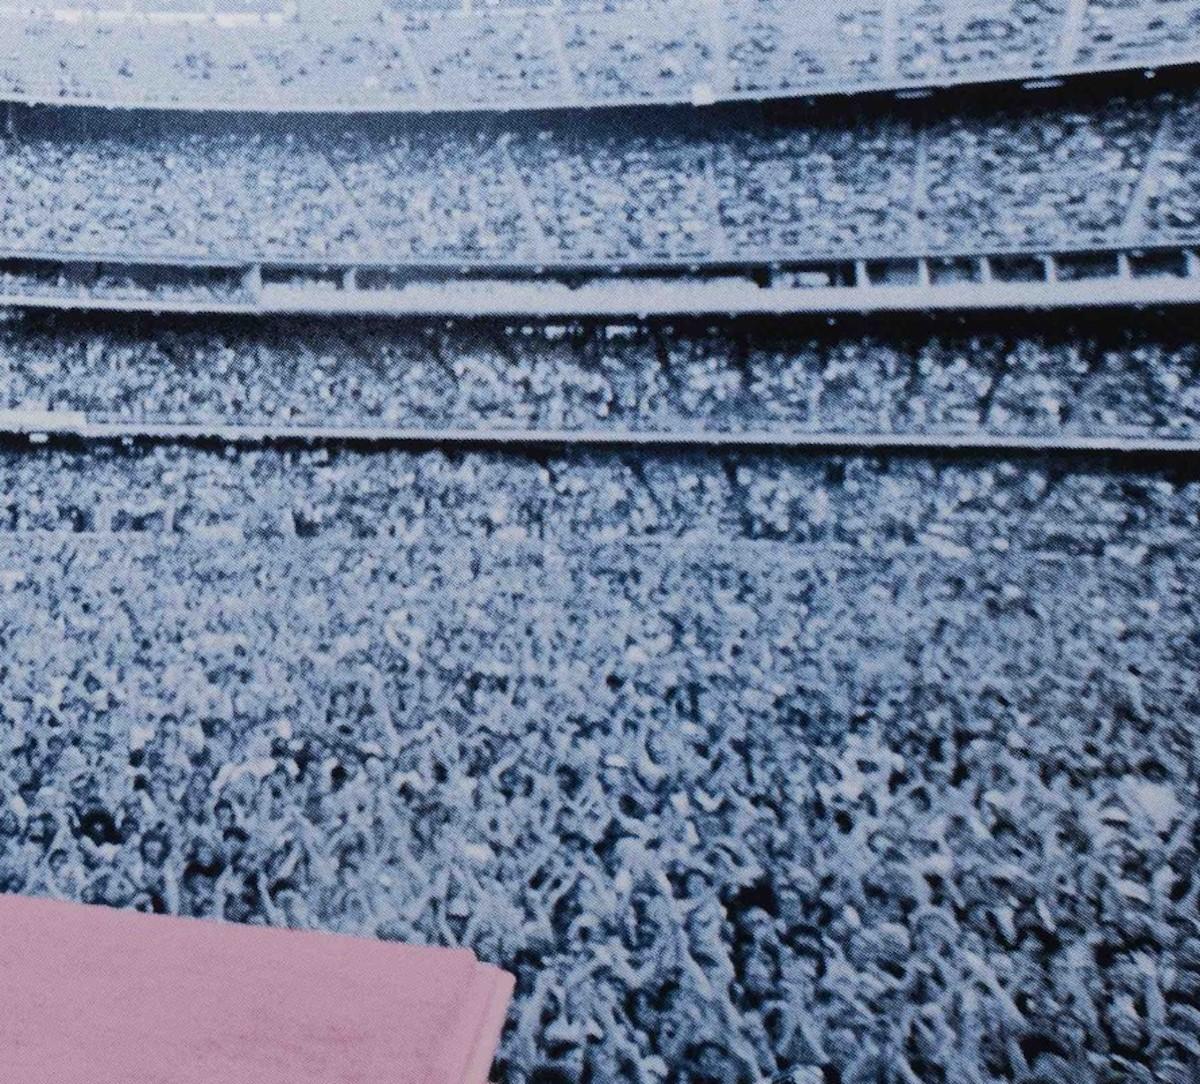 Elton John: Home Run-Dodger-Stadion 1975  Berühmte Drucke, Elton John Kunst (Blau), Abstract Print, von David Studwell